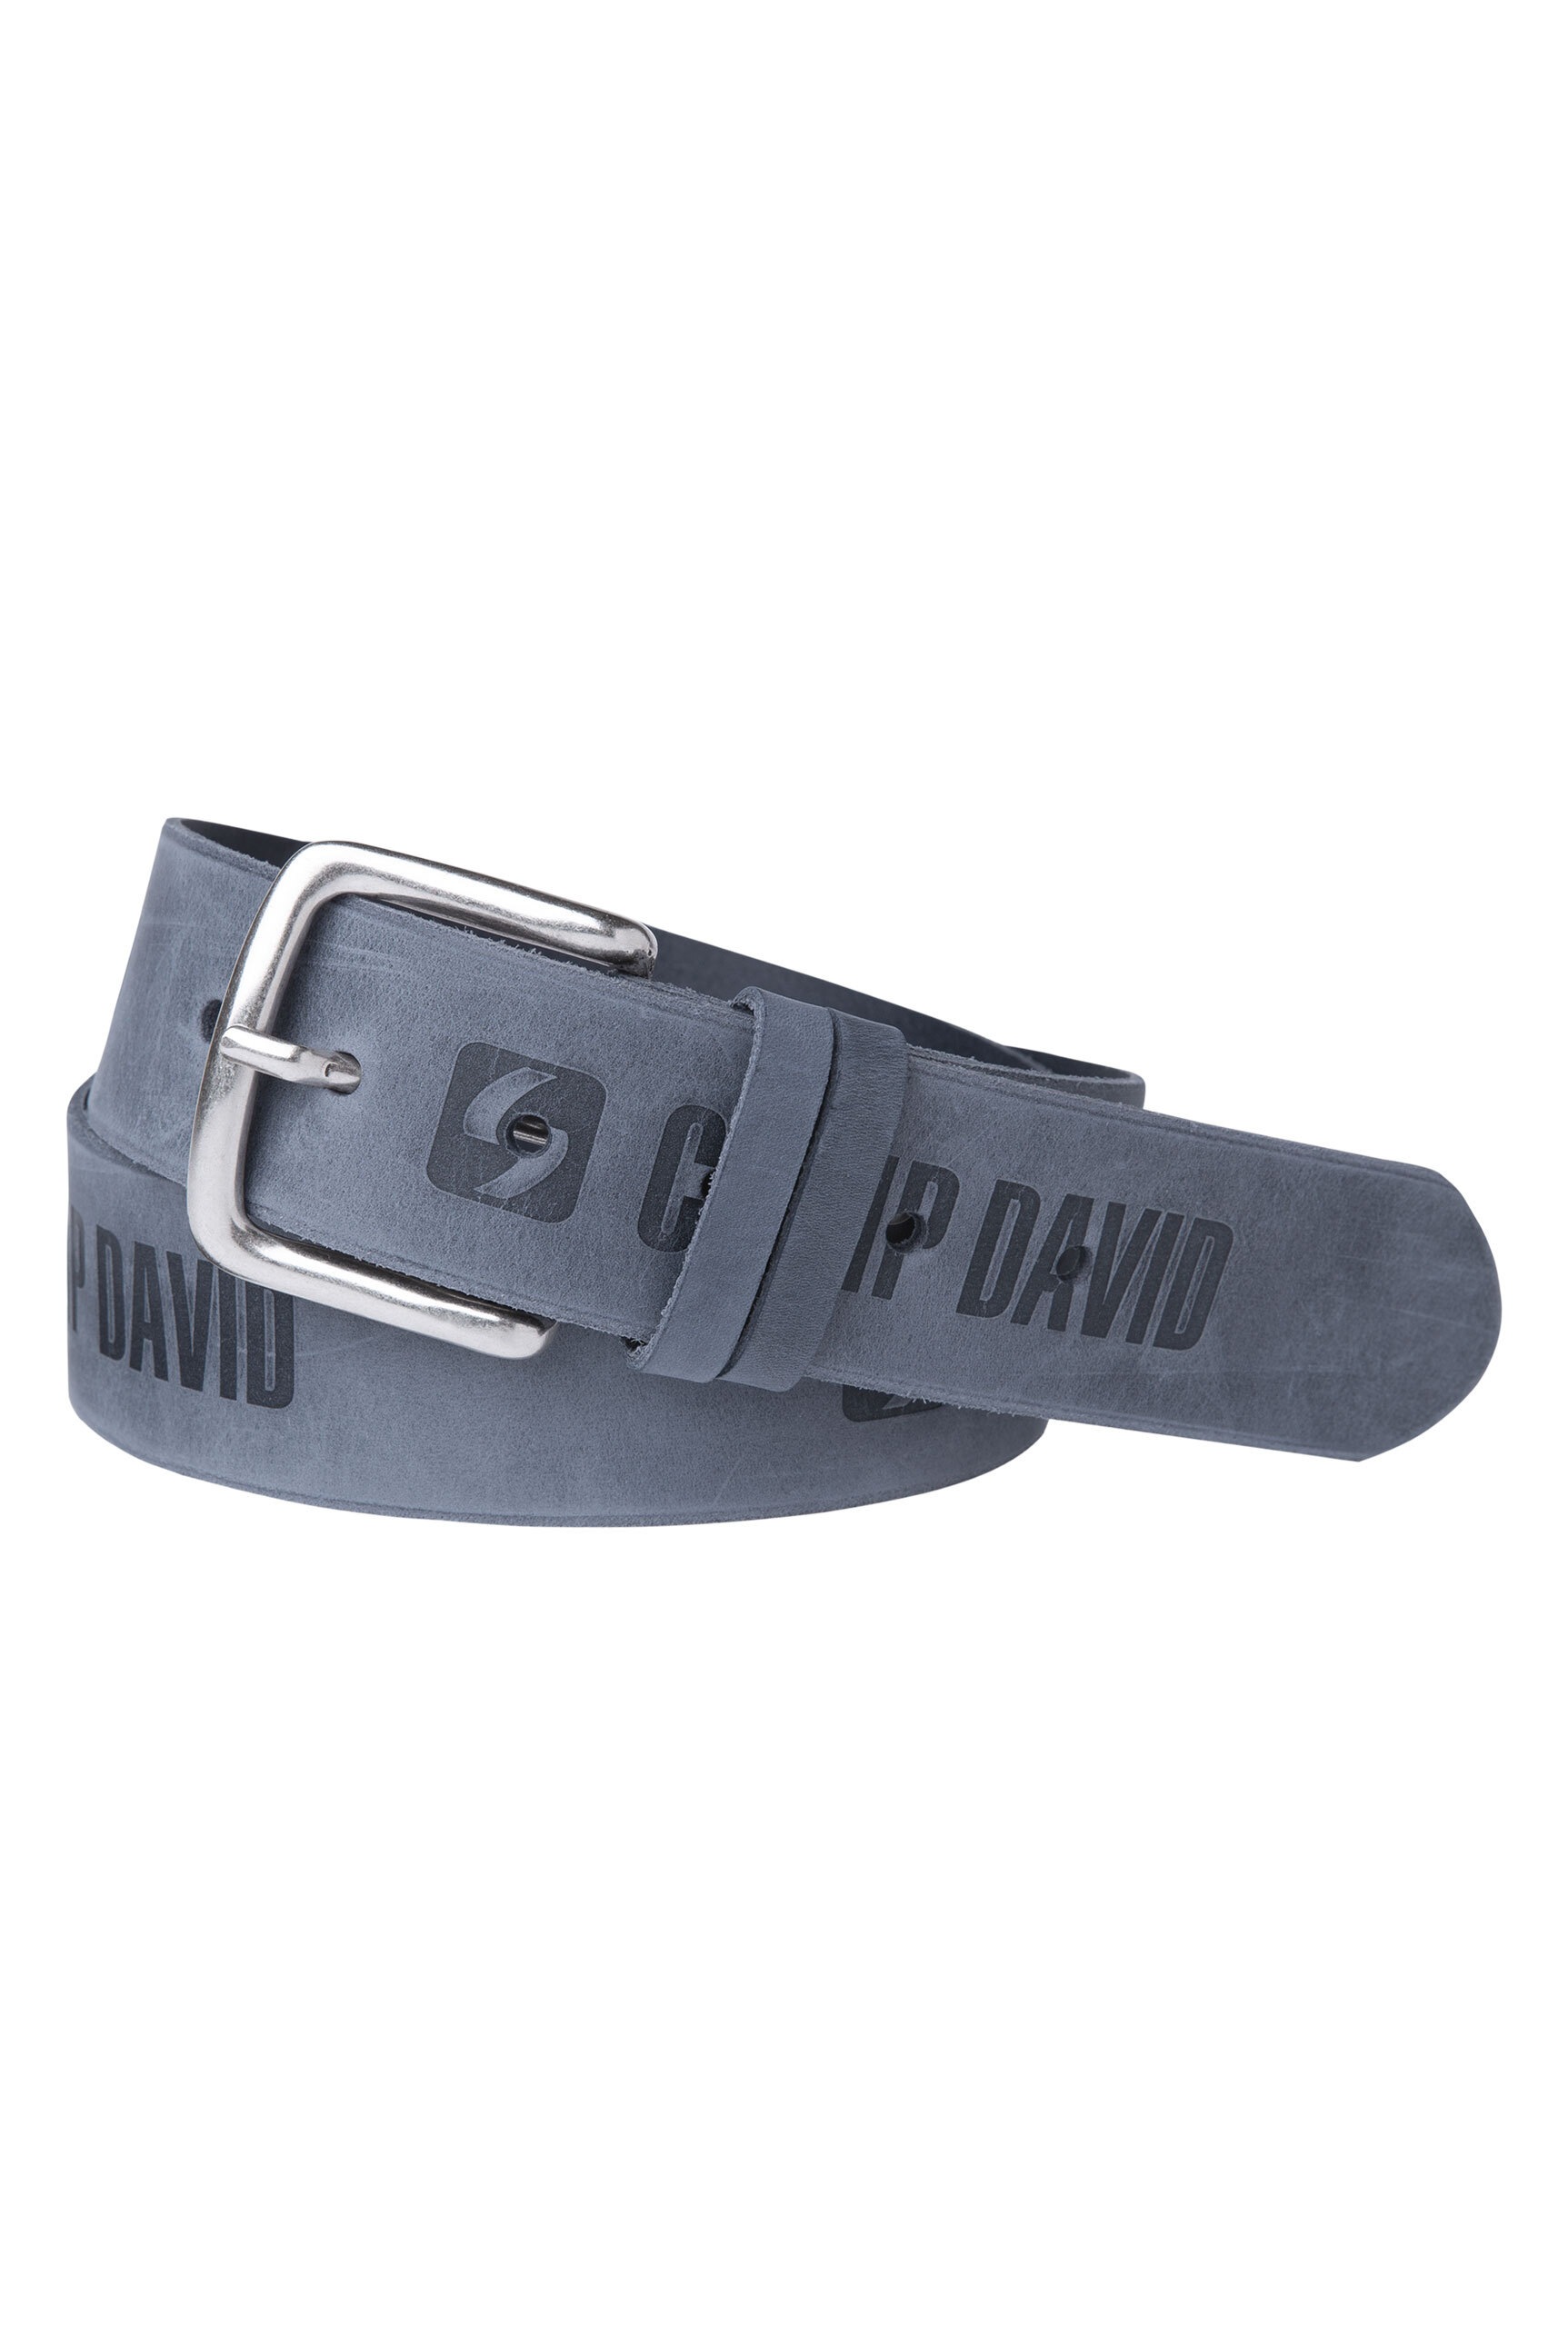 CAMP DAVID Ledergürtel, mit Used-Optik I\'m kaufen walking | online